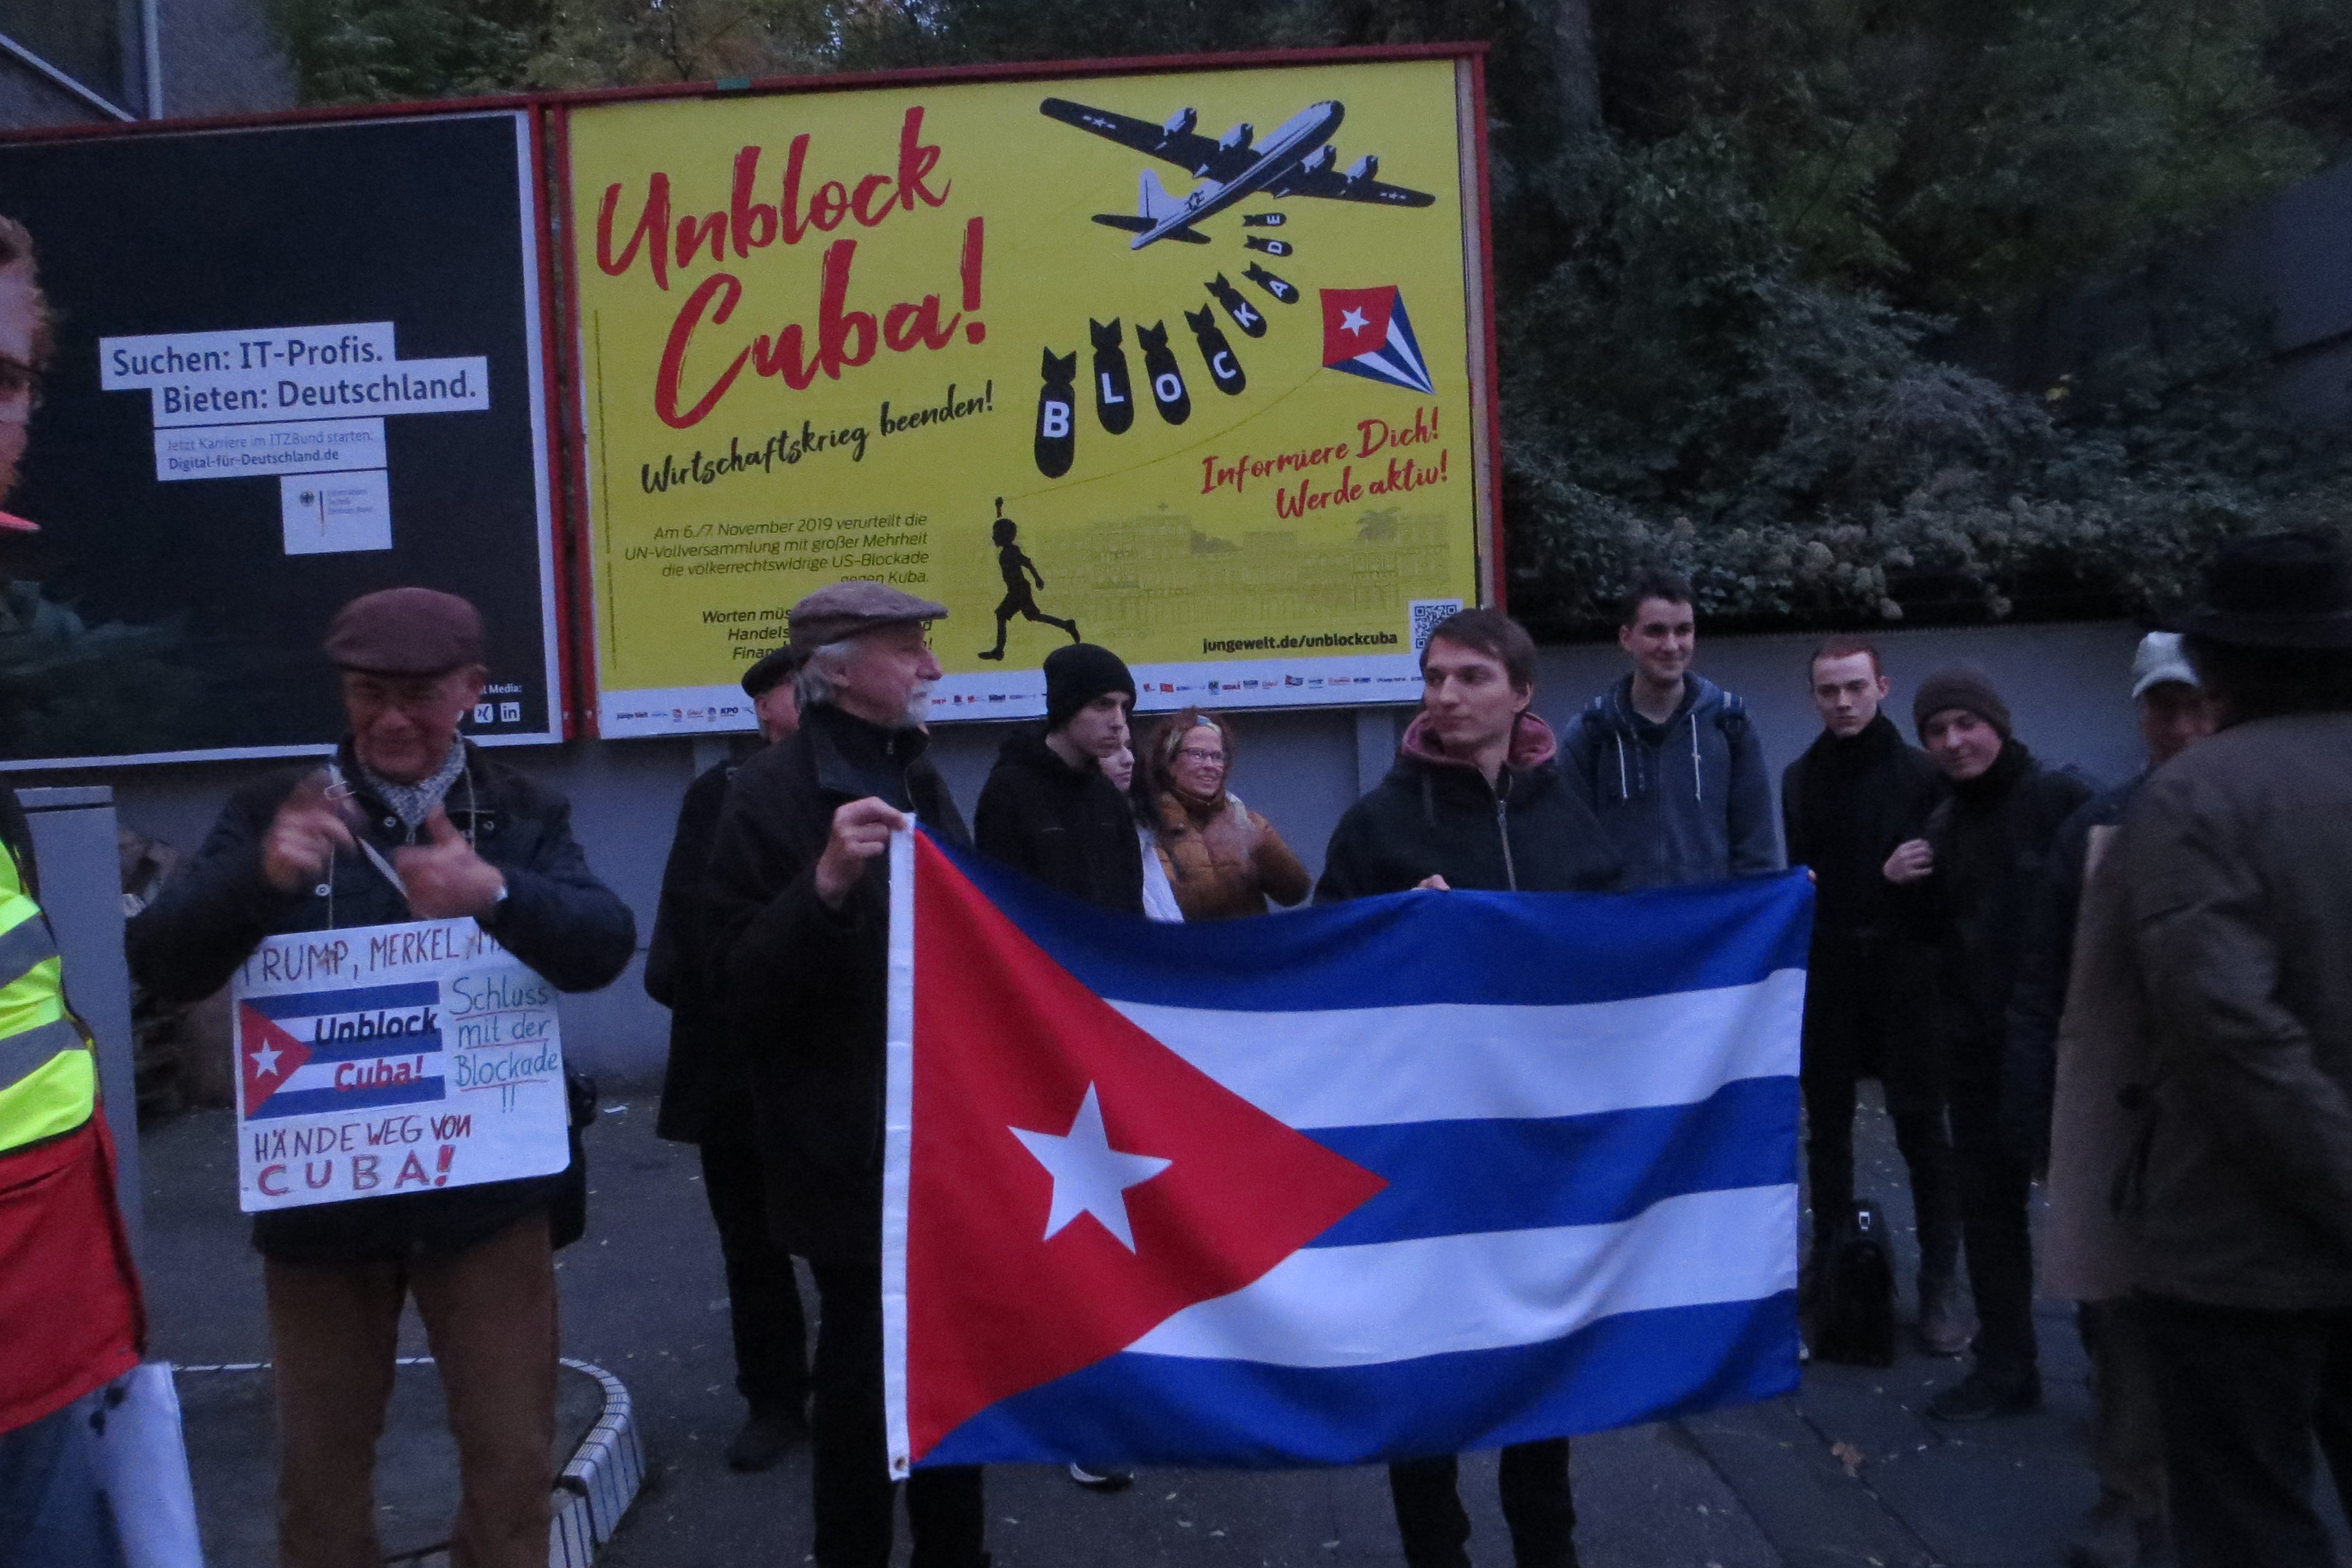 Flashmob: Unblock Cuba, Stuttgart